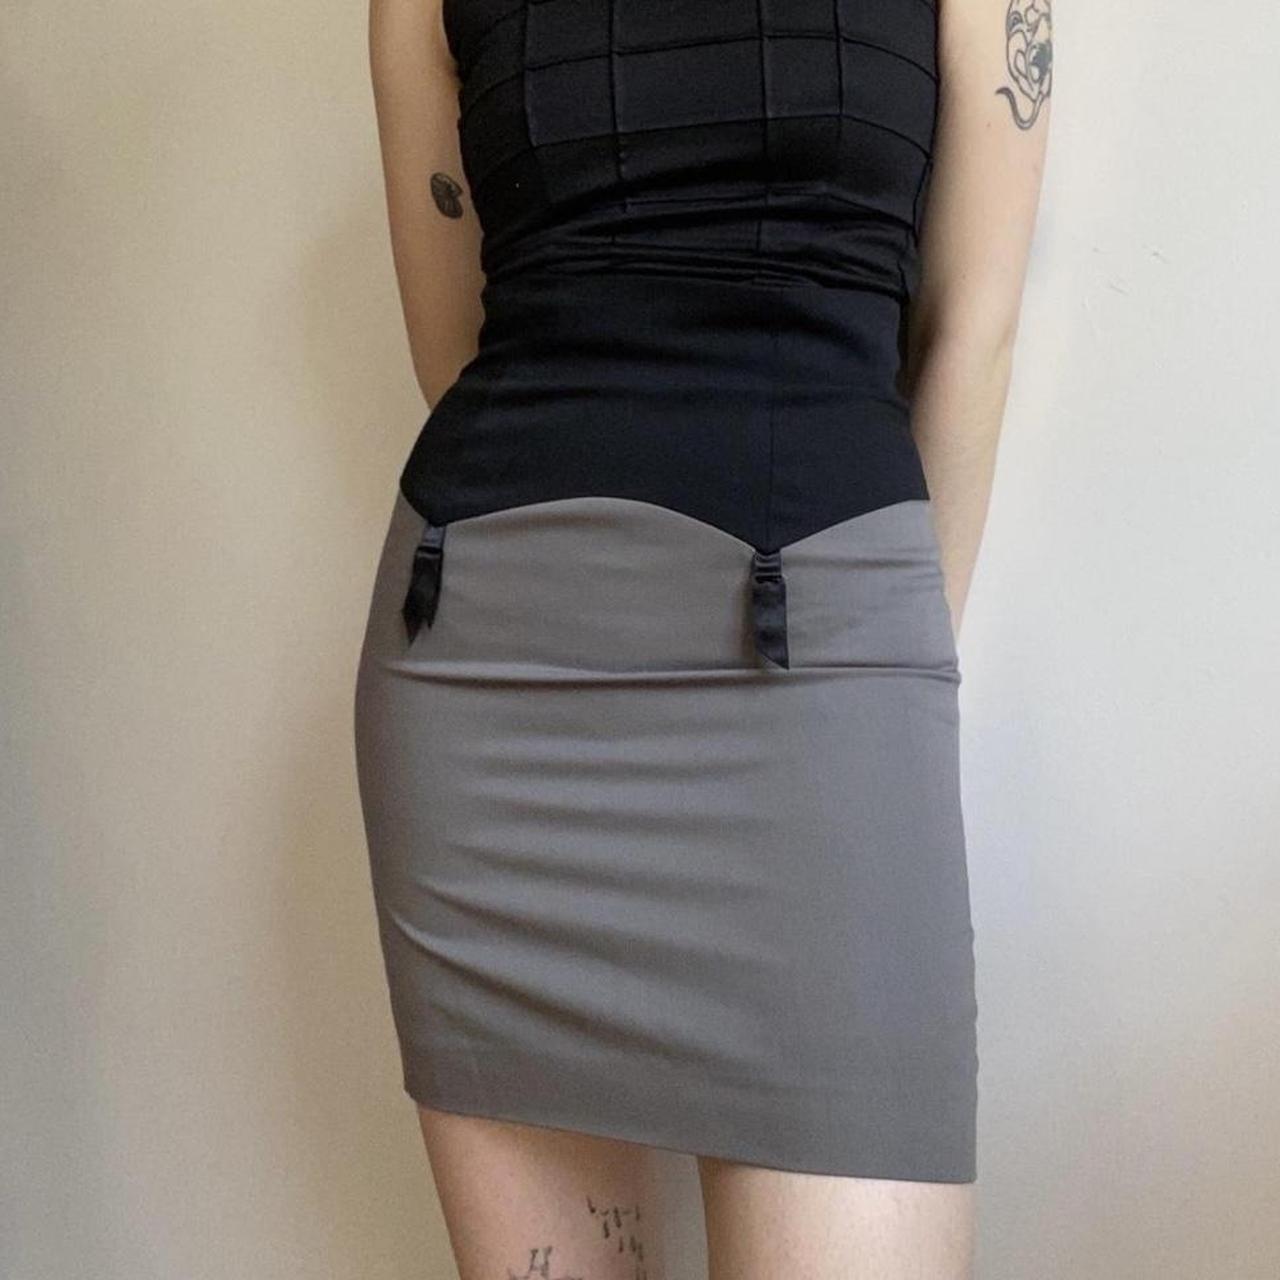 Chantal Thomass Women's Black and Grey Skirt (2)